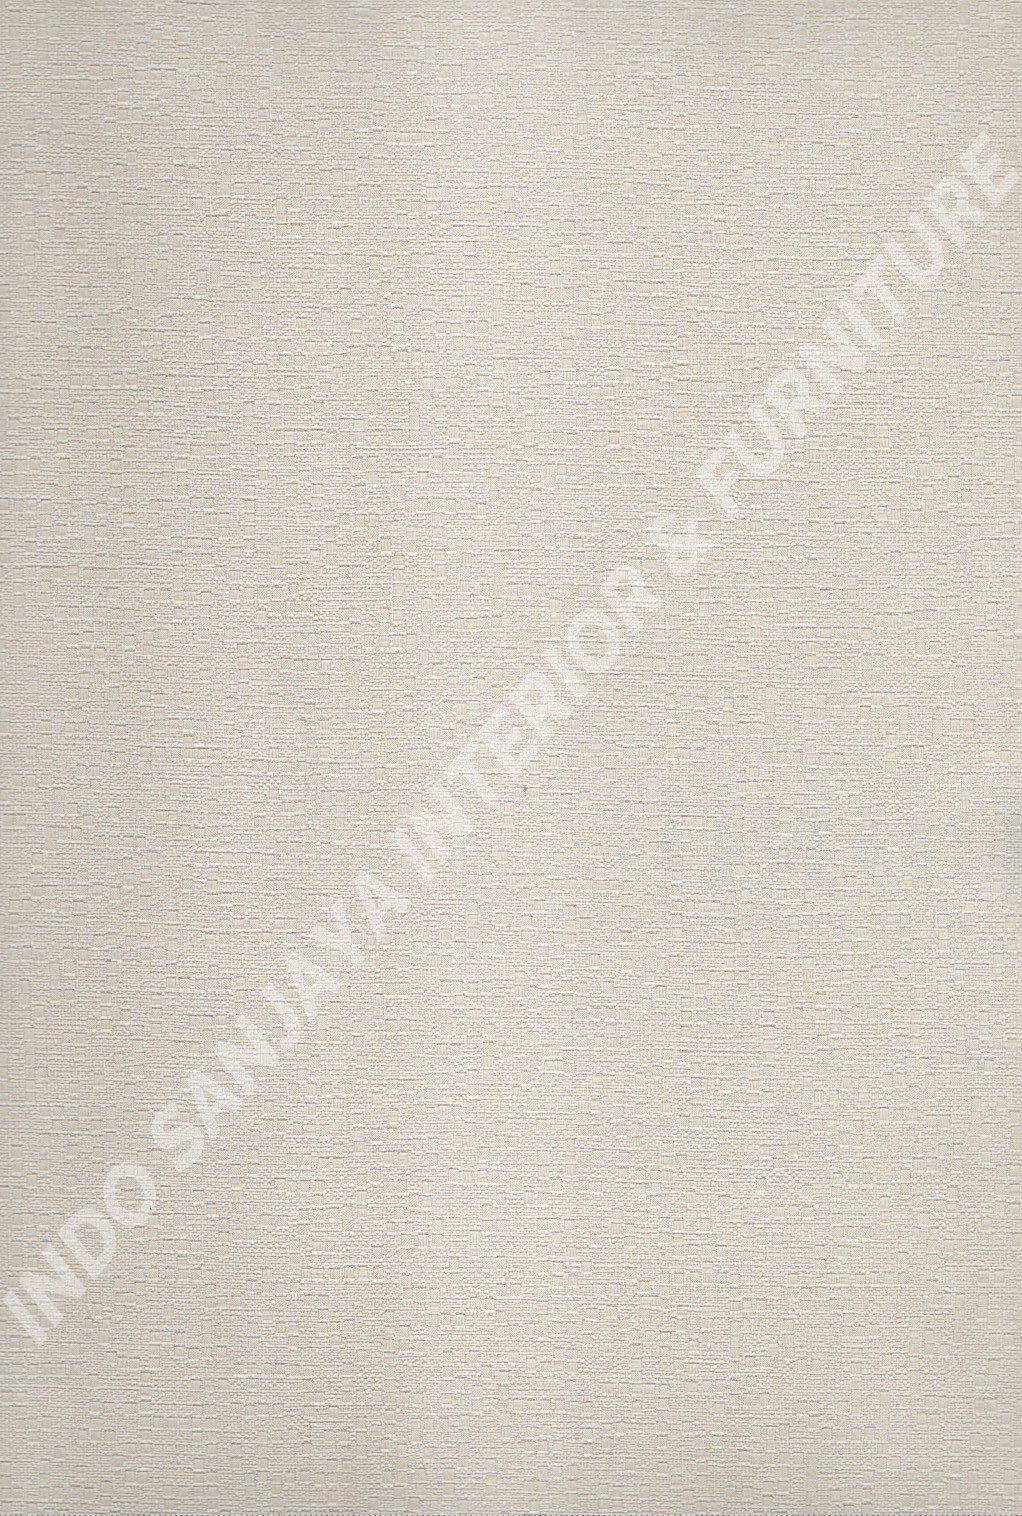 wallpaper   Wallpaper Minimalis Polos 3063:3063 corak  warna 